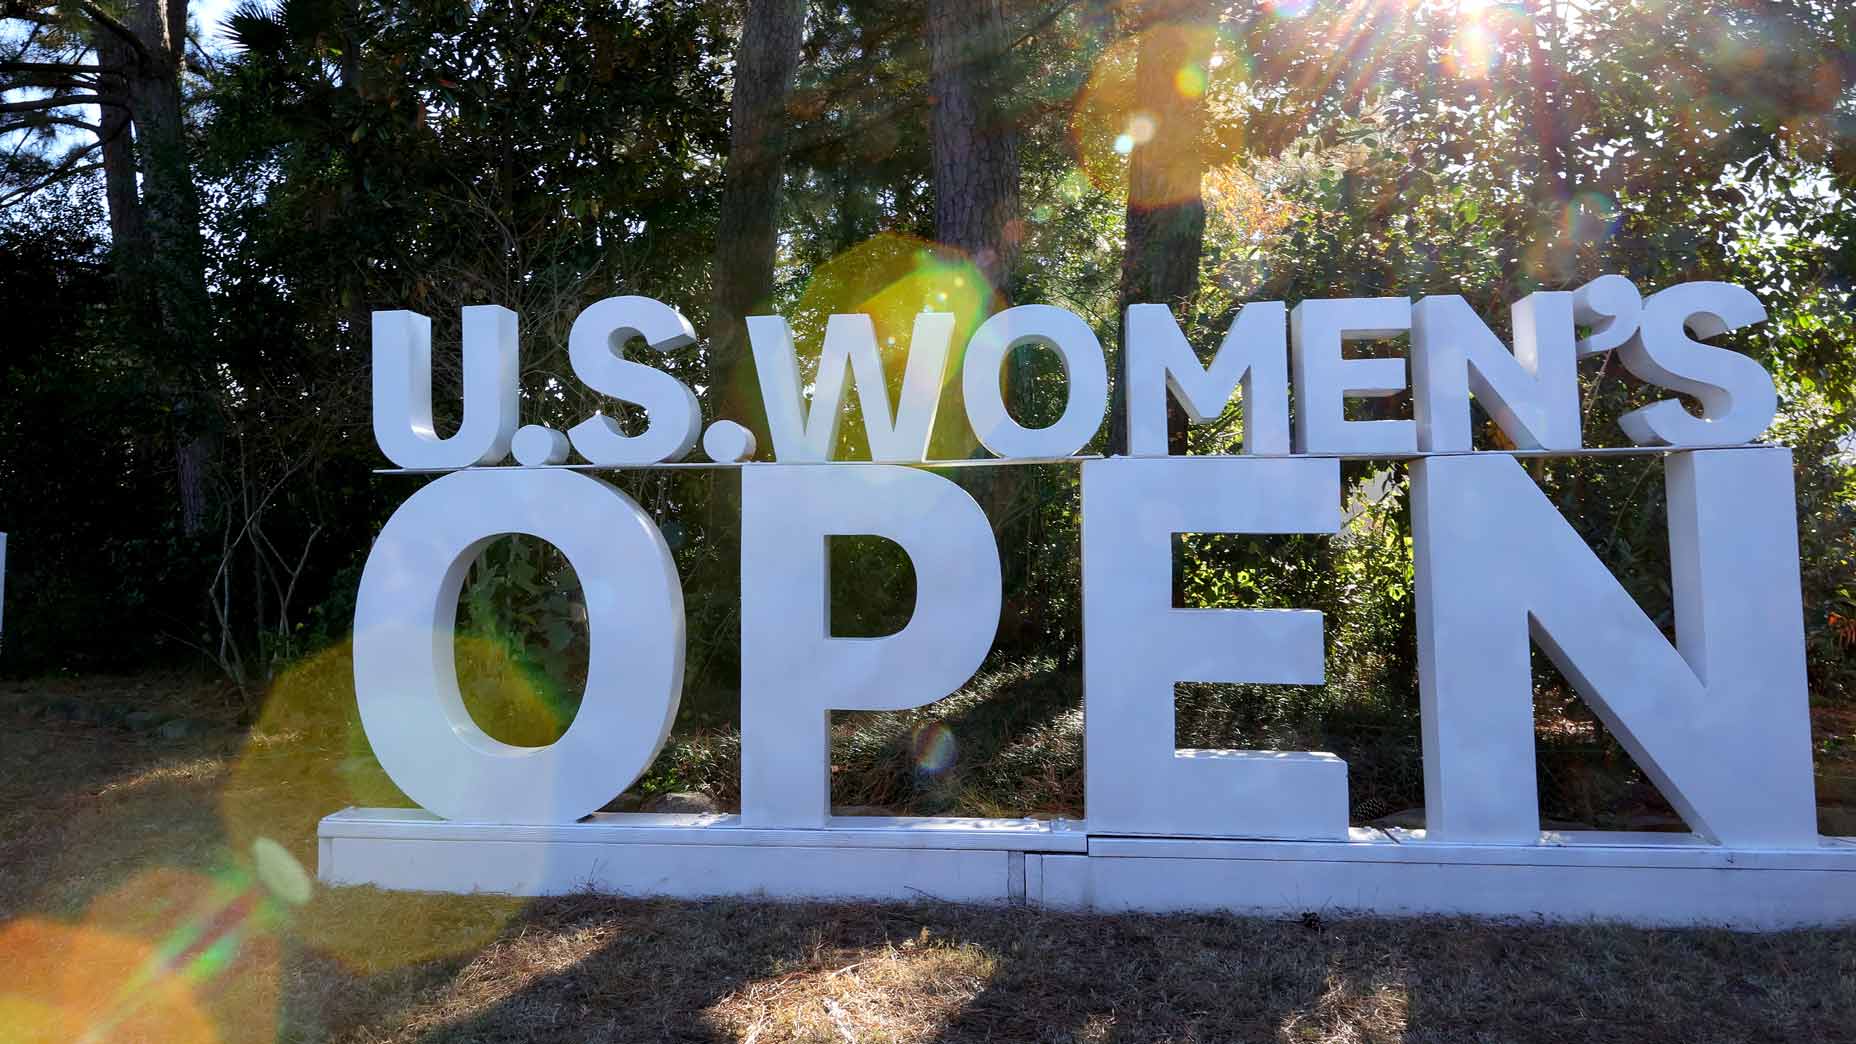 Other Women's majors should match record US Open purse, says Vu - CNA